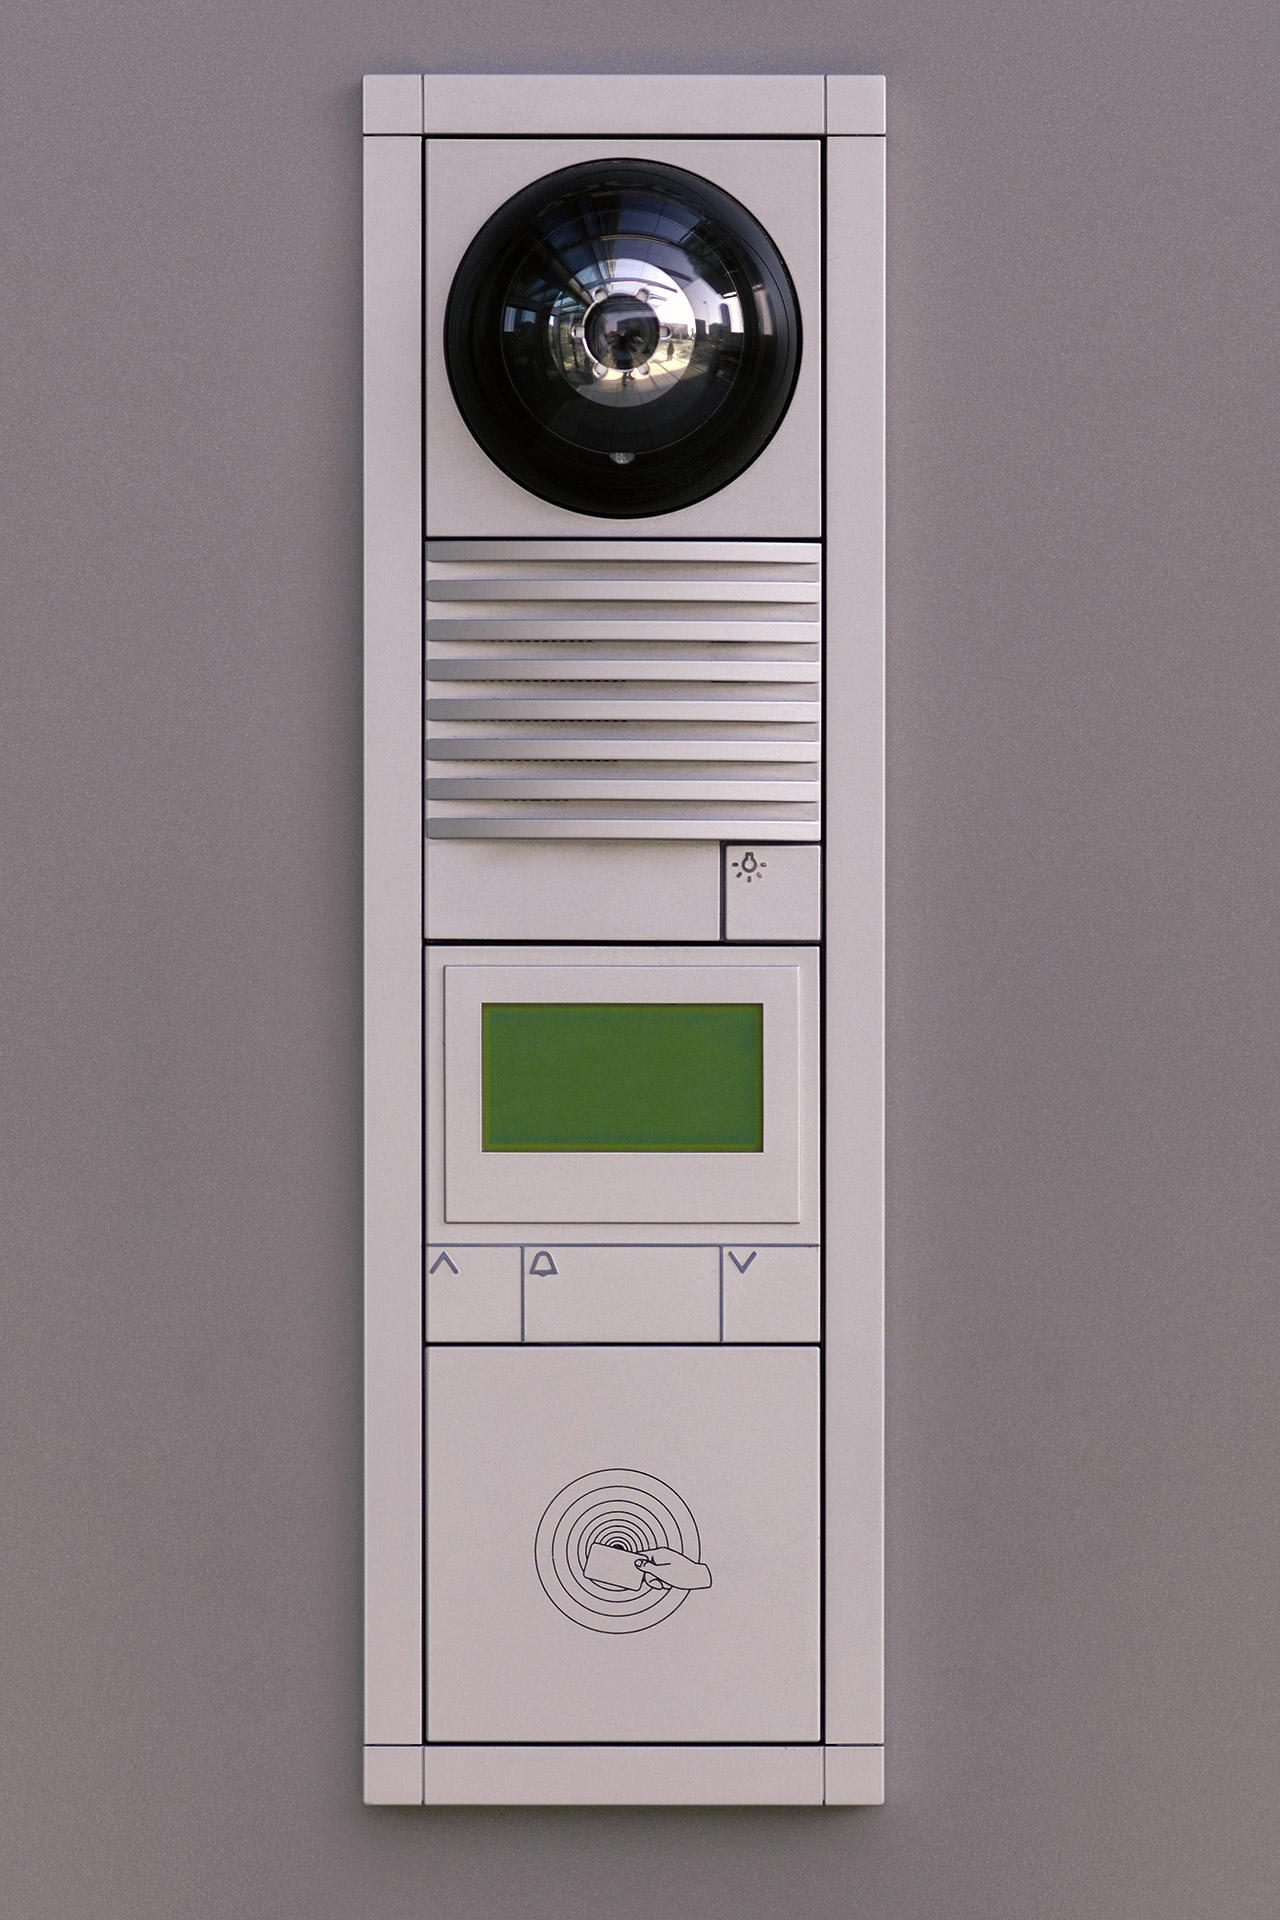 grey access control system